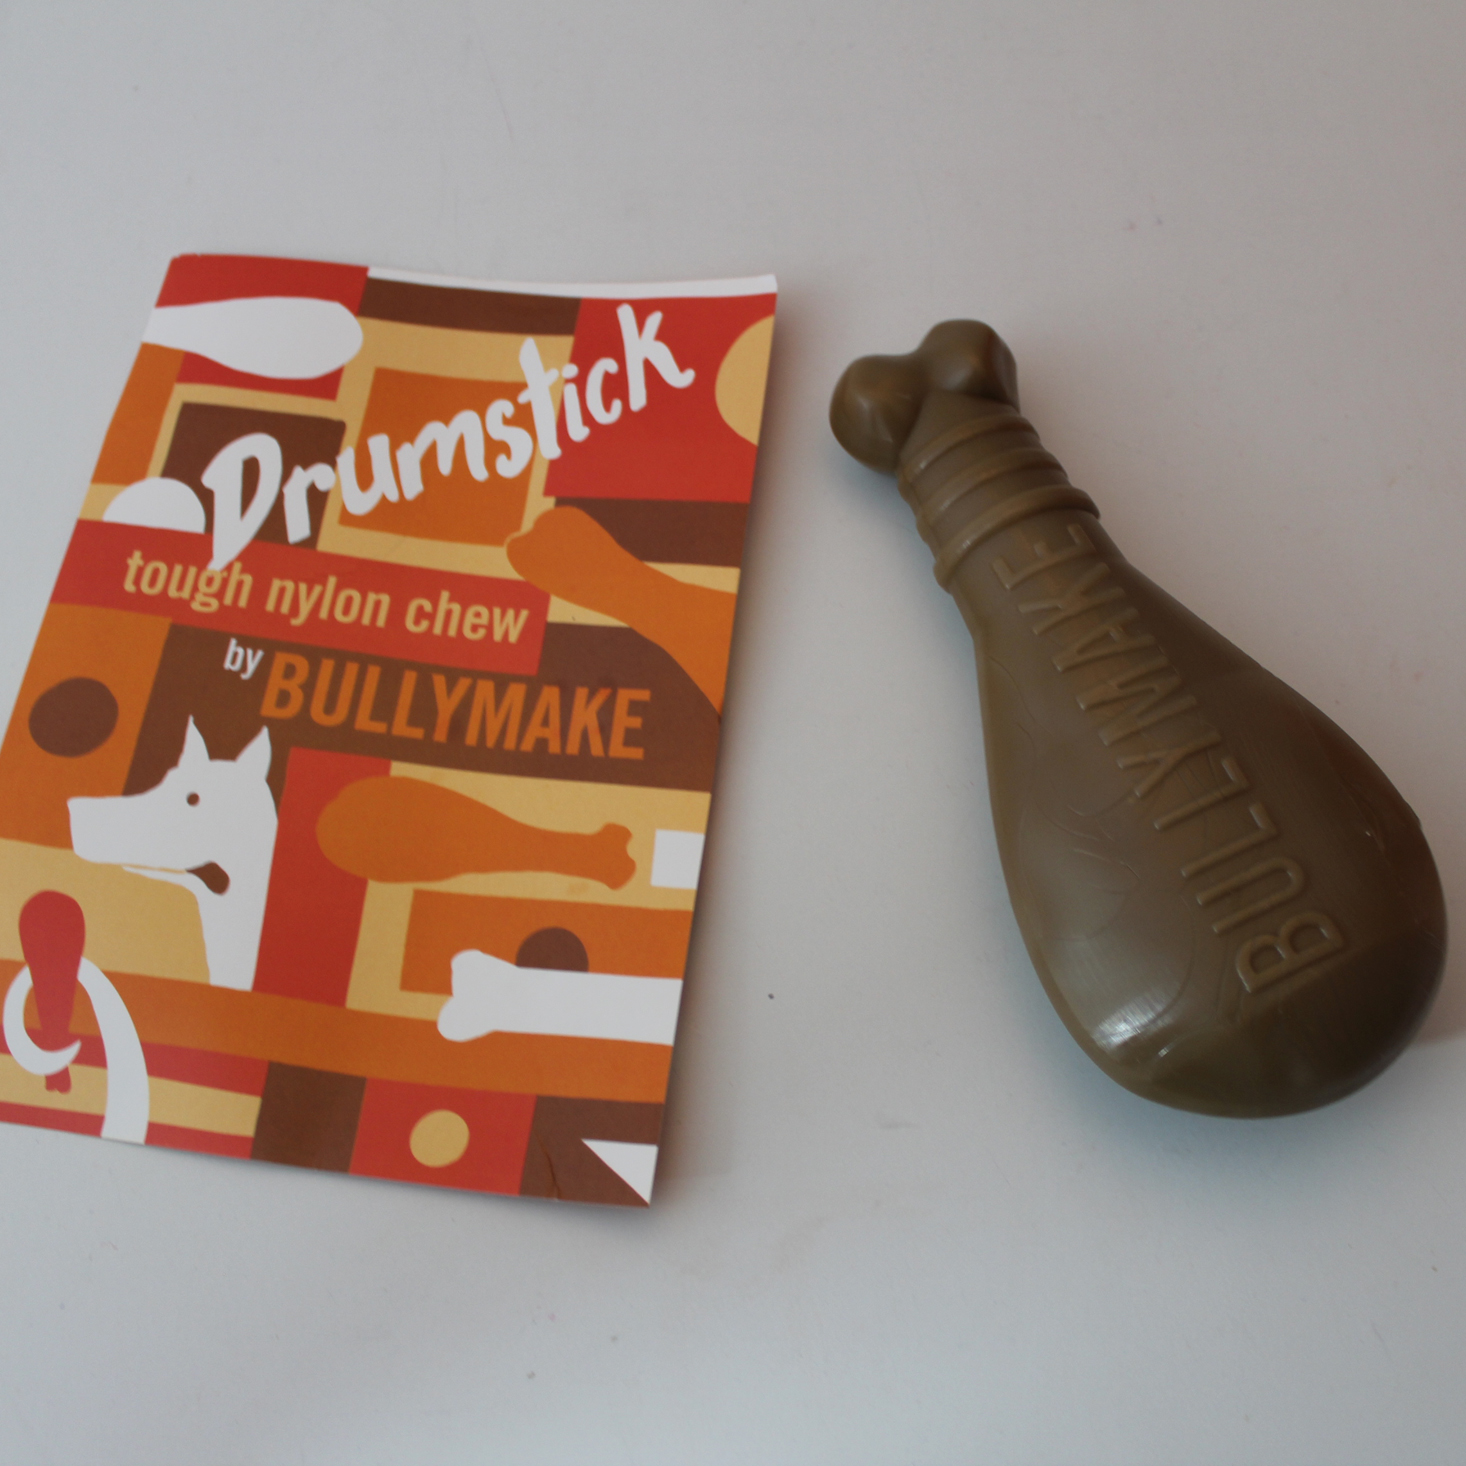 Bullymake Box November 2019 Drumstick